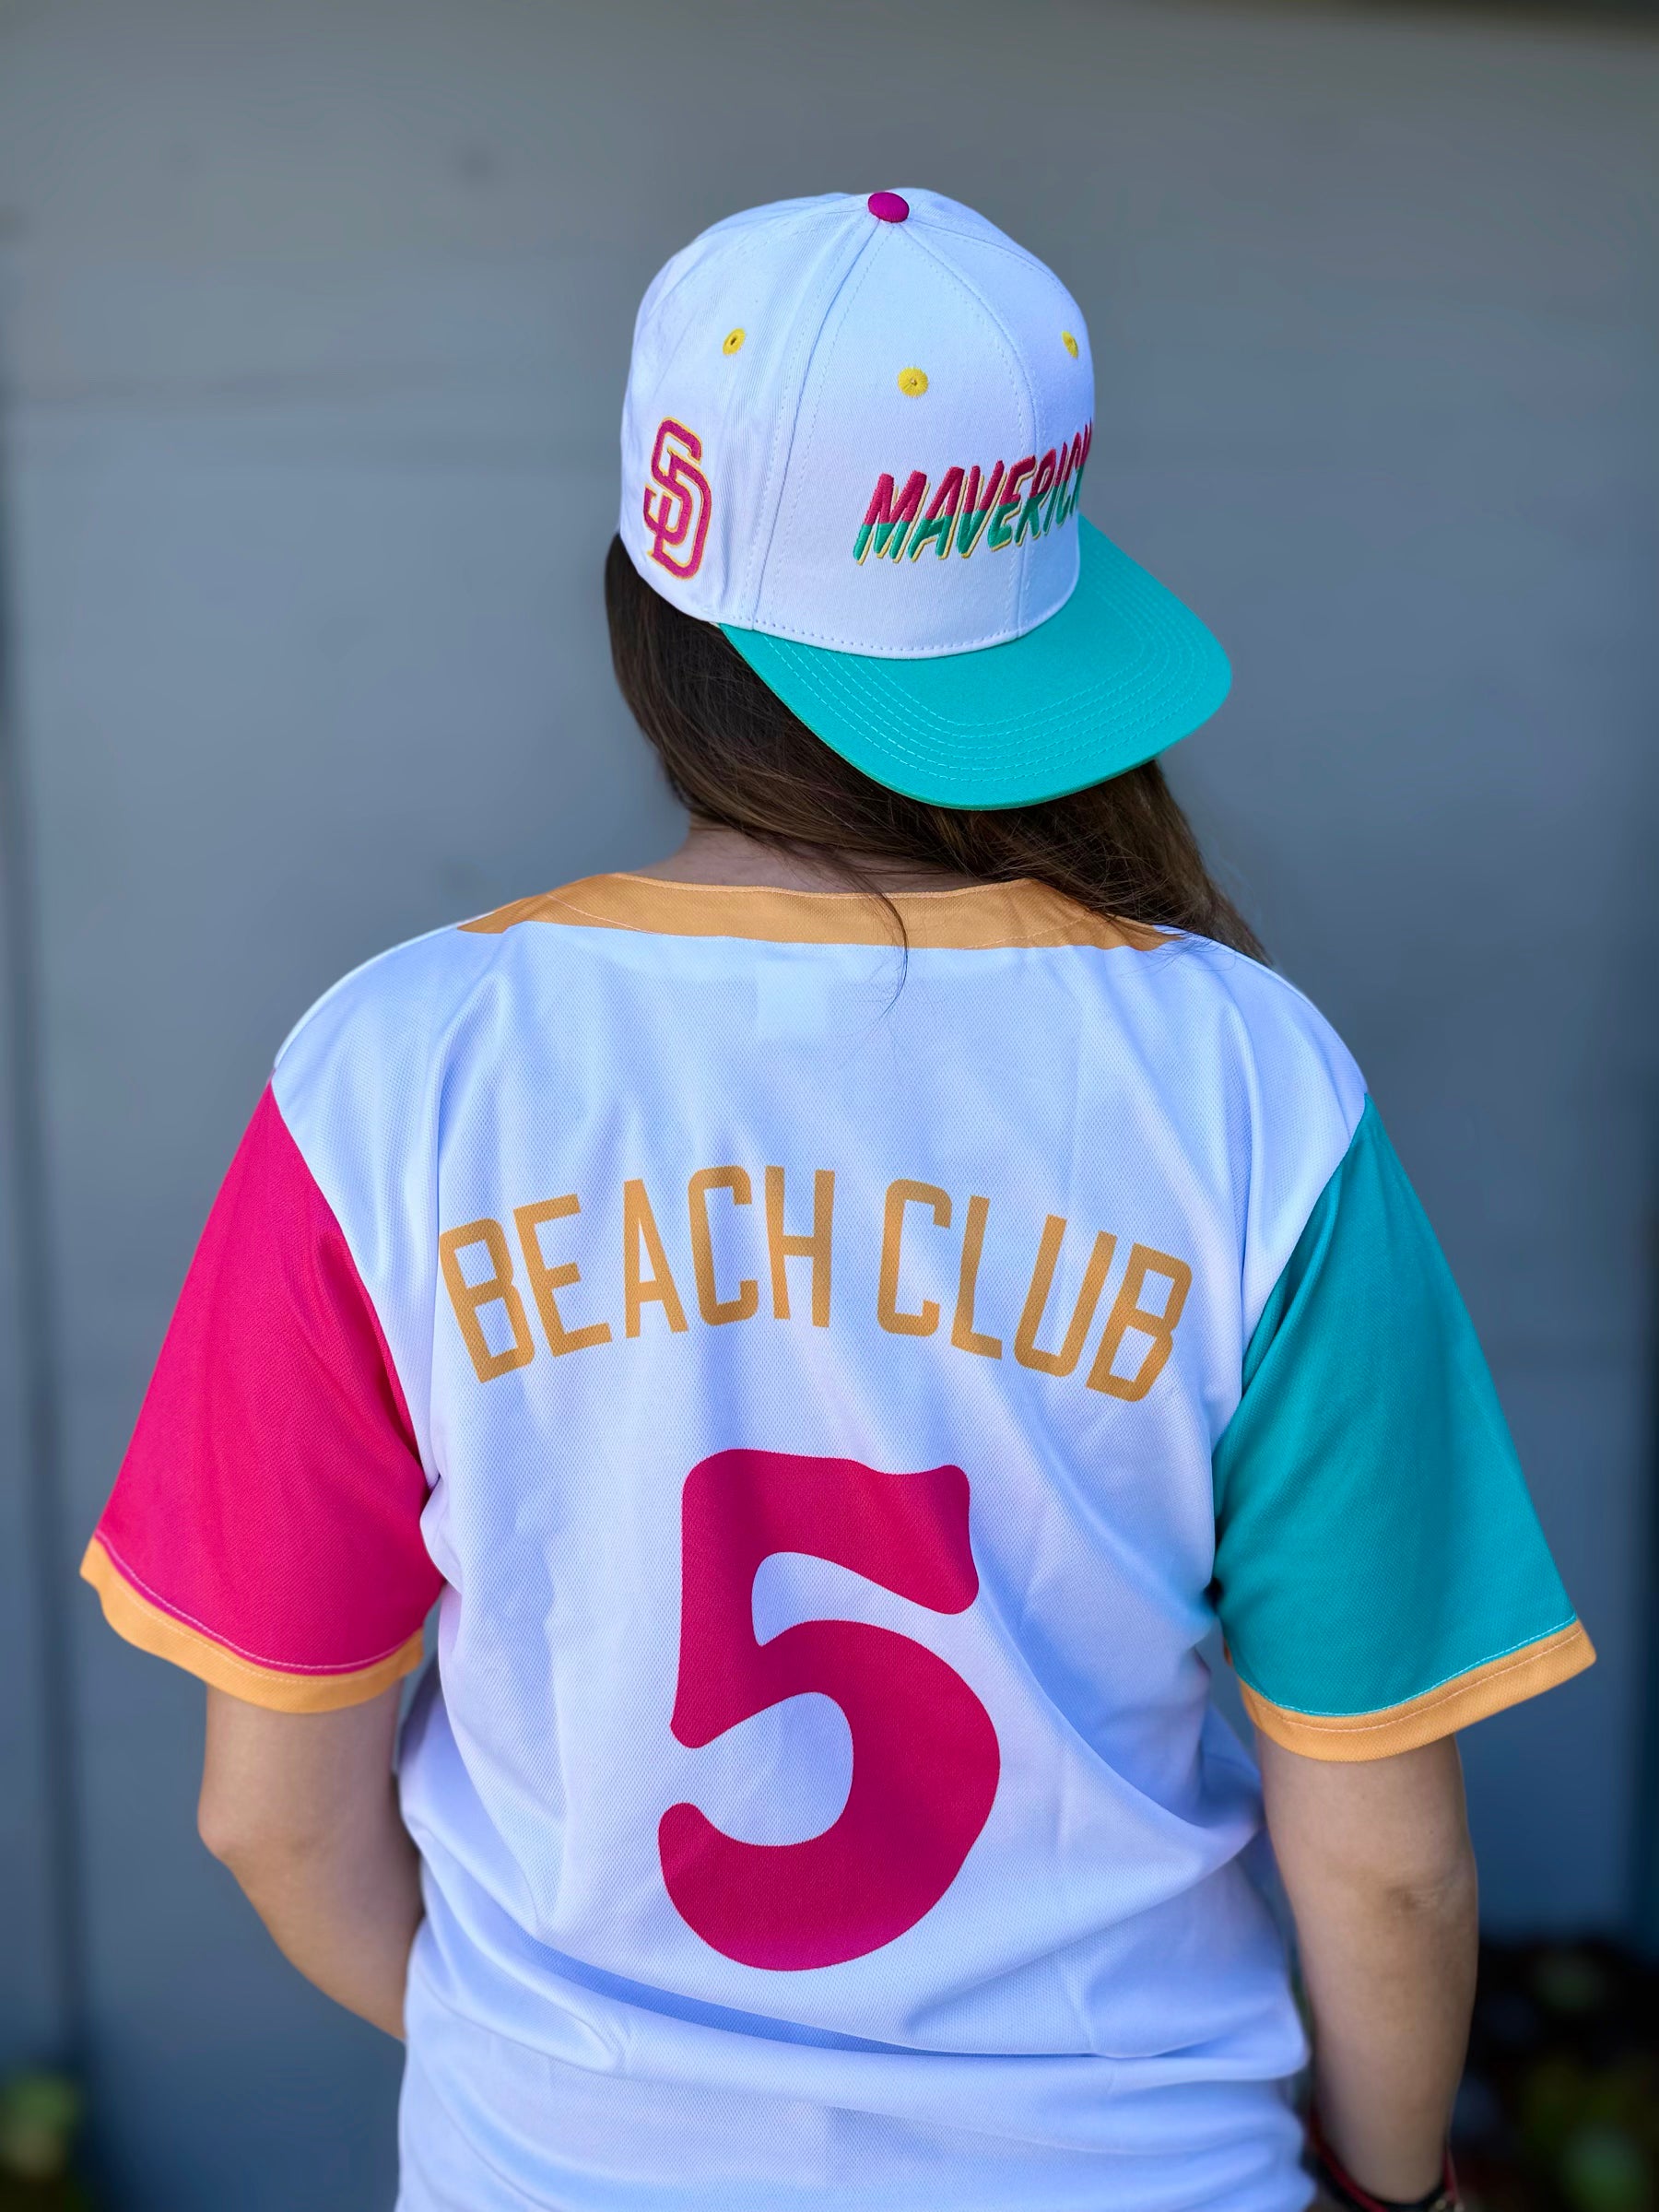 Mavericks Beach club retro Flatbill Snapback and jersey